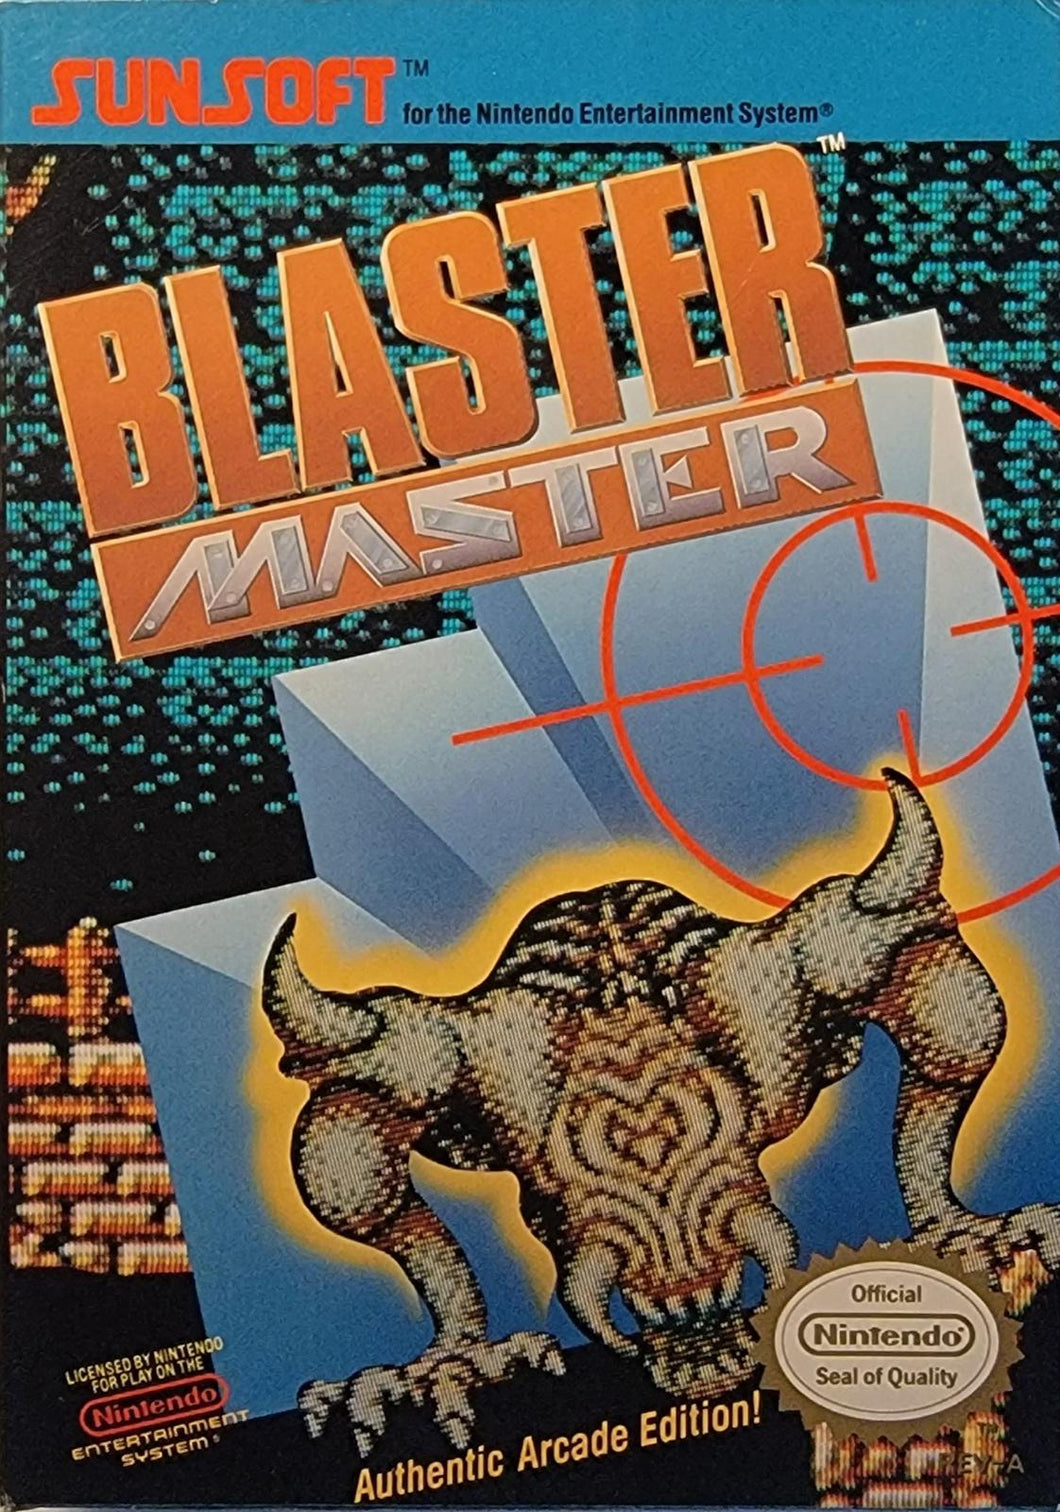 Blaster Master NES